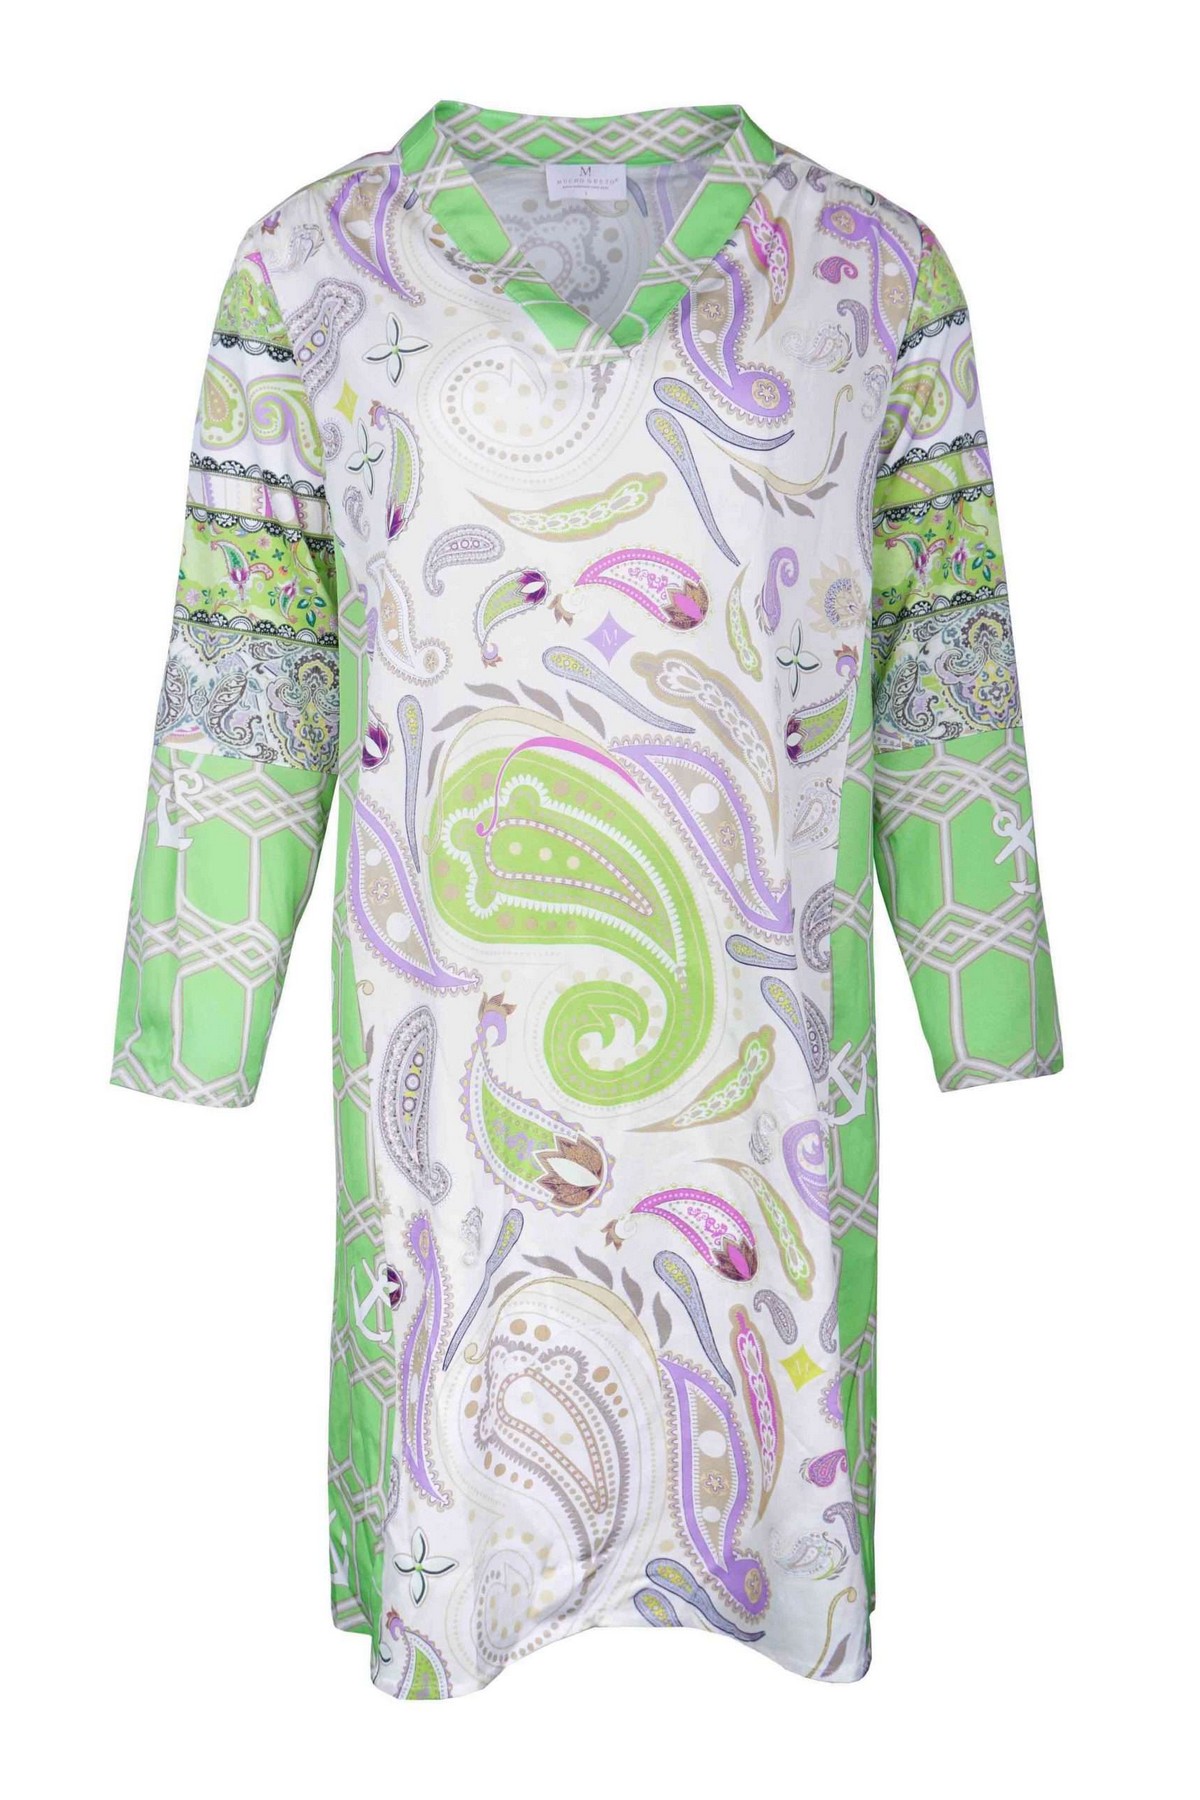 Kleed kort print V paisley in de kleur lila groen van het merk Mucho Gusto